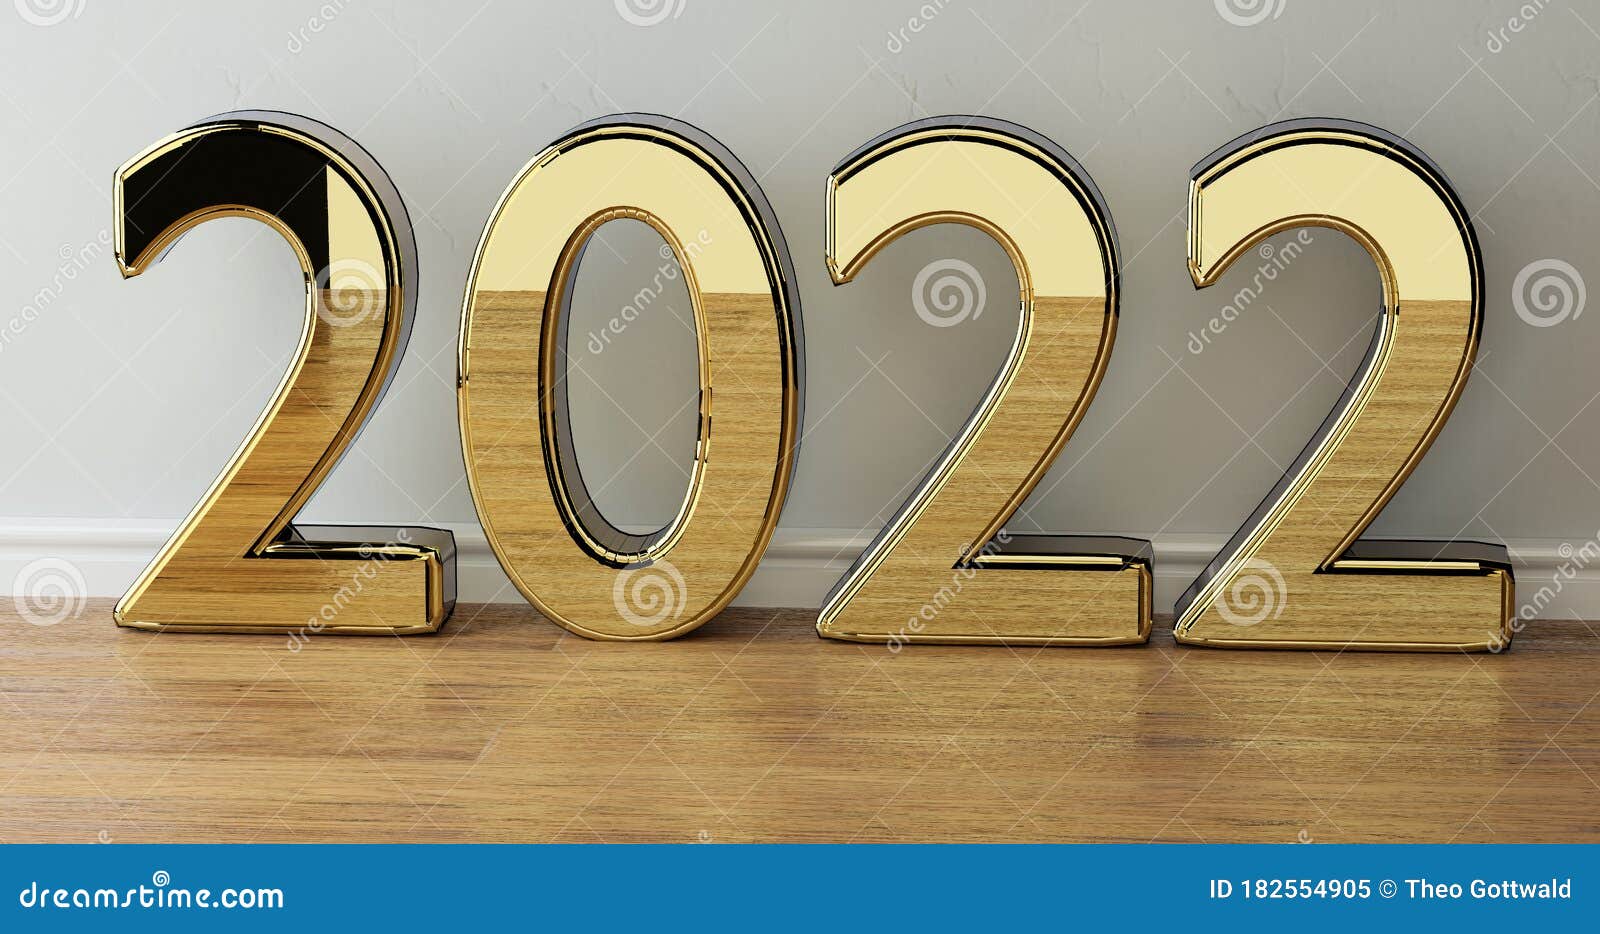 Year 2022  Golden Illustration  Stock Illustration  